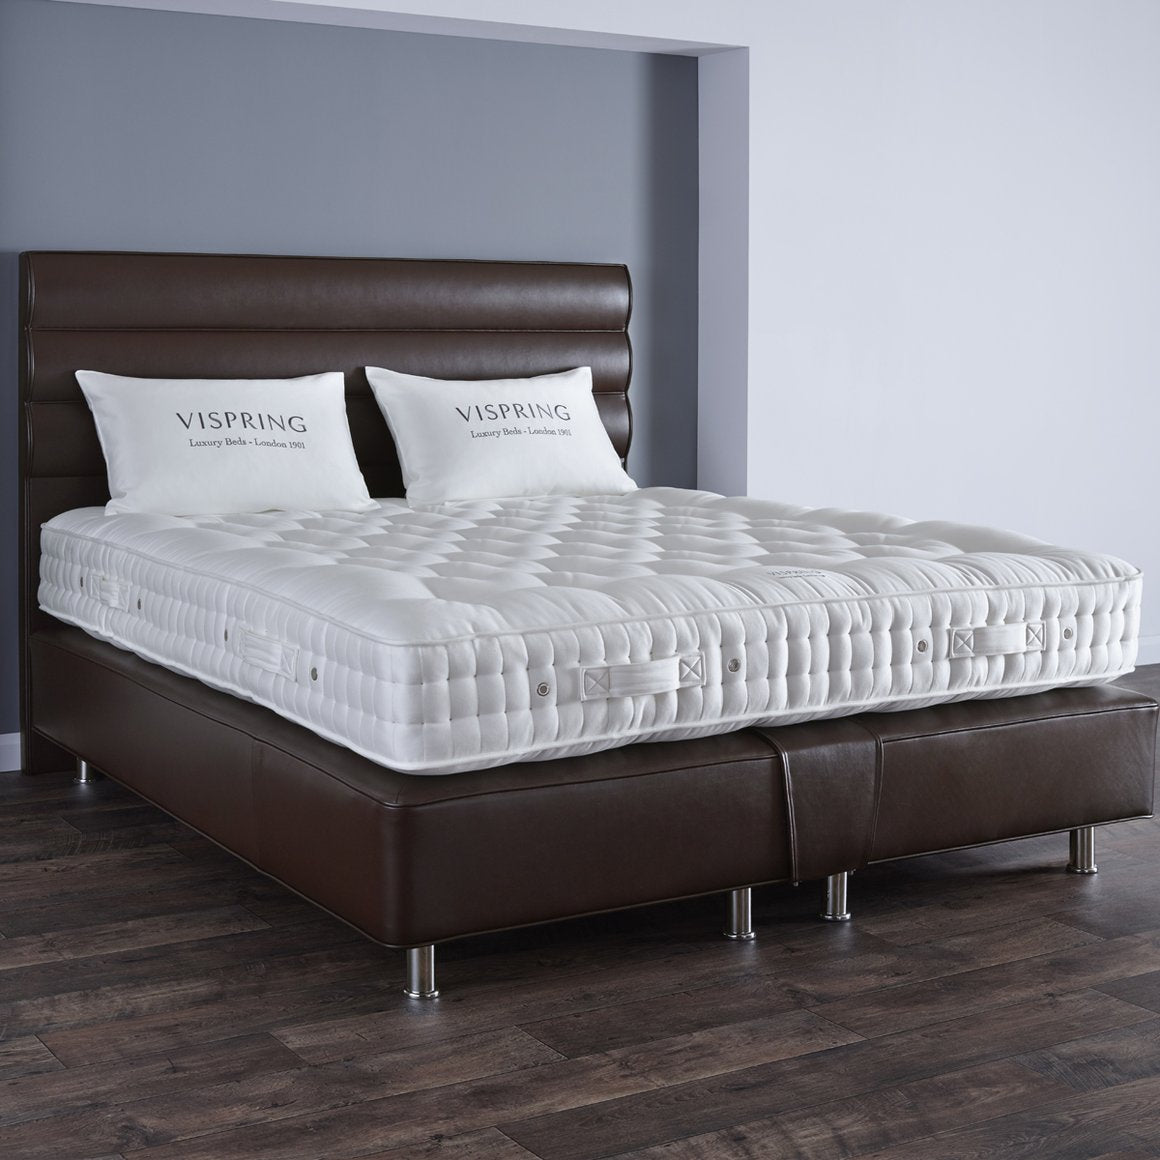 coronet mattress